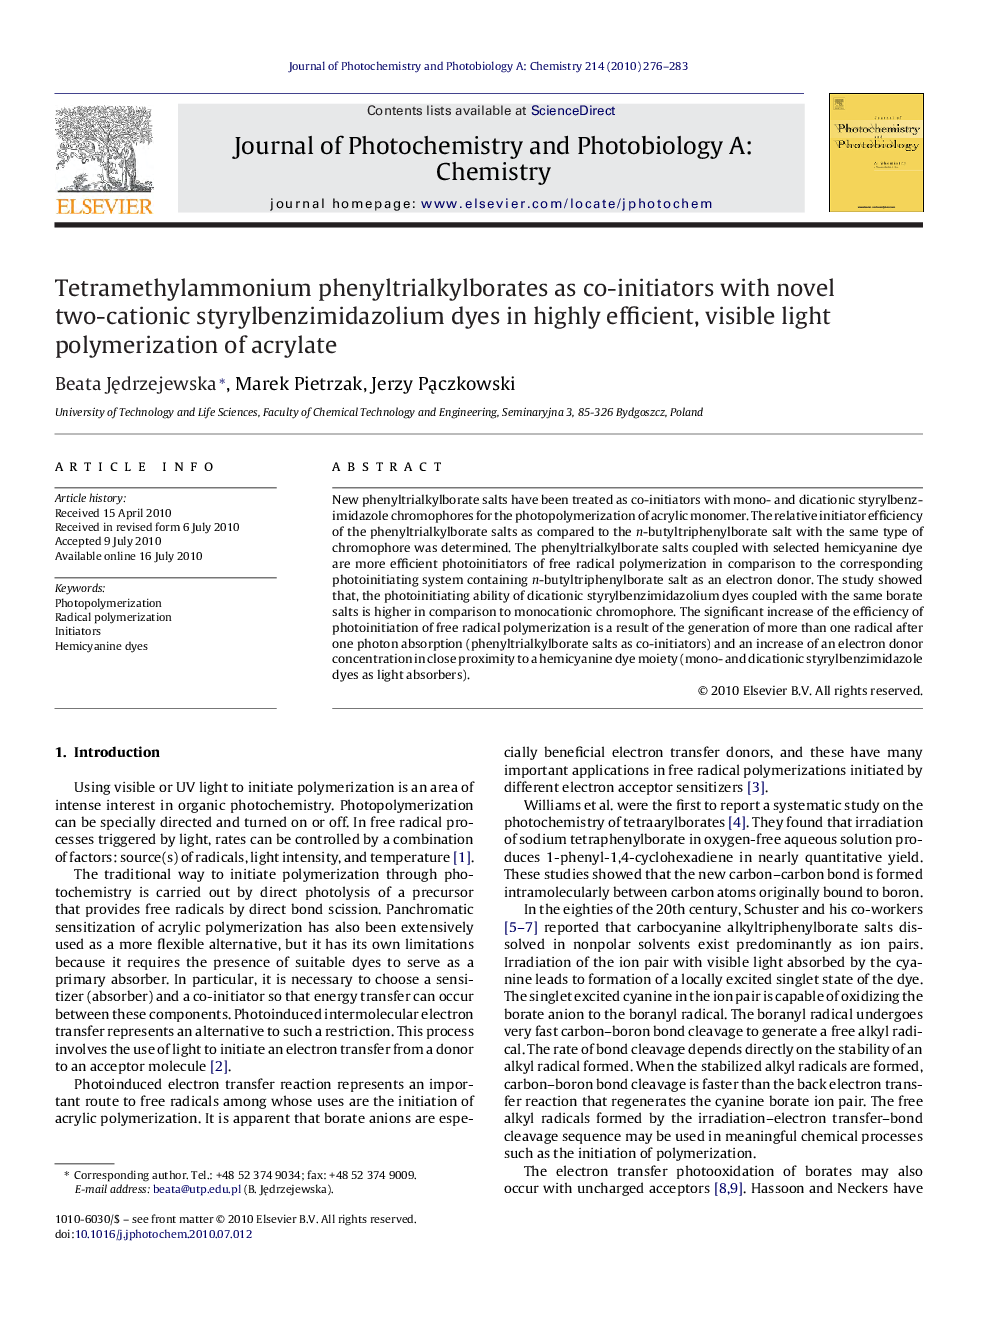 Tetramethylammonium phenyltrialkylborates as co-initiators with novel two-cationic styrylbenzimidazolium dyes in highly efficient, visible light polymerization of acrylate